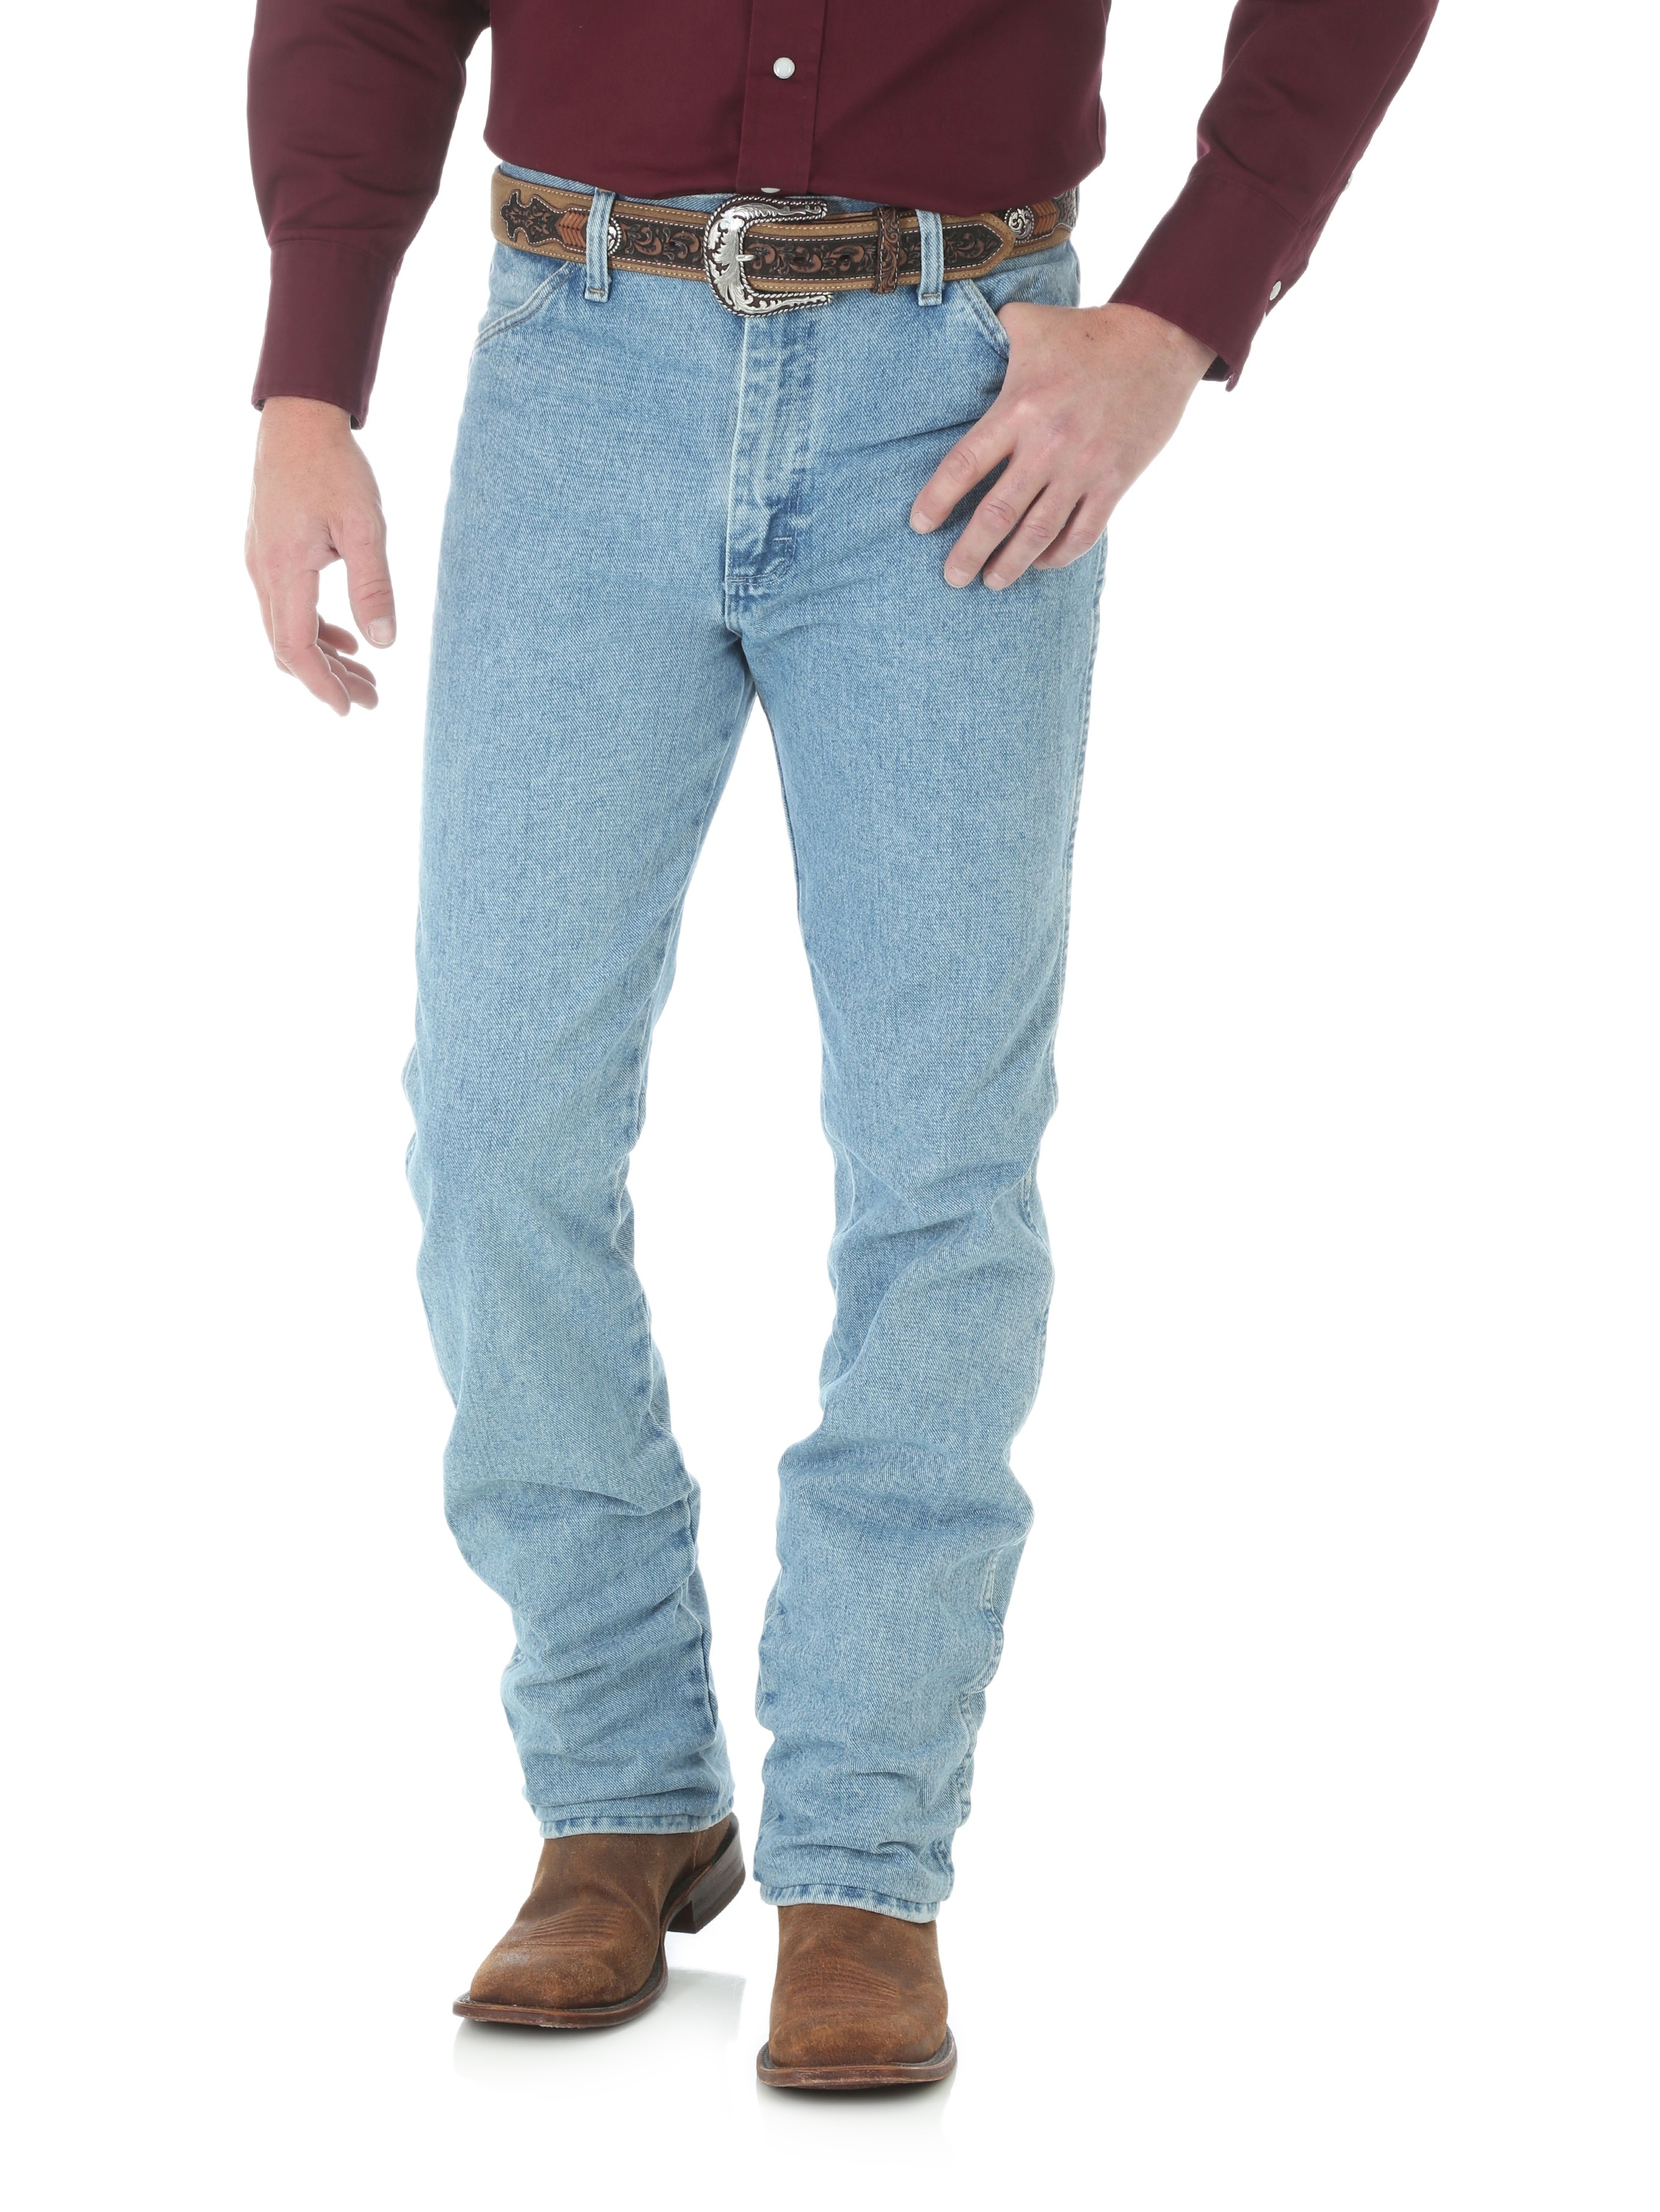 Wrangler Men's Western Cowboy Cut Slim Fit Jean - Antique Wash - image 1 of 3